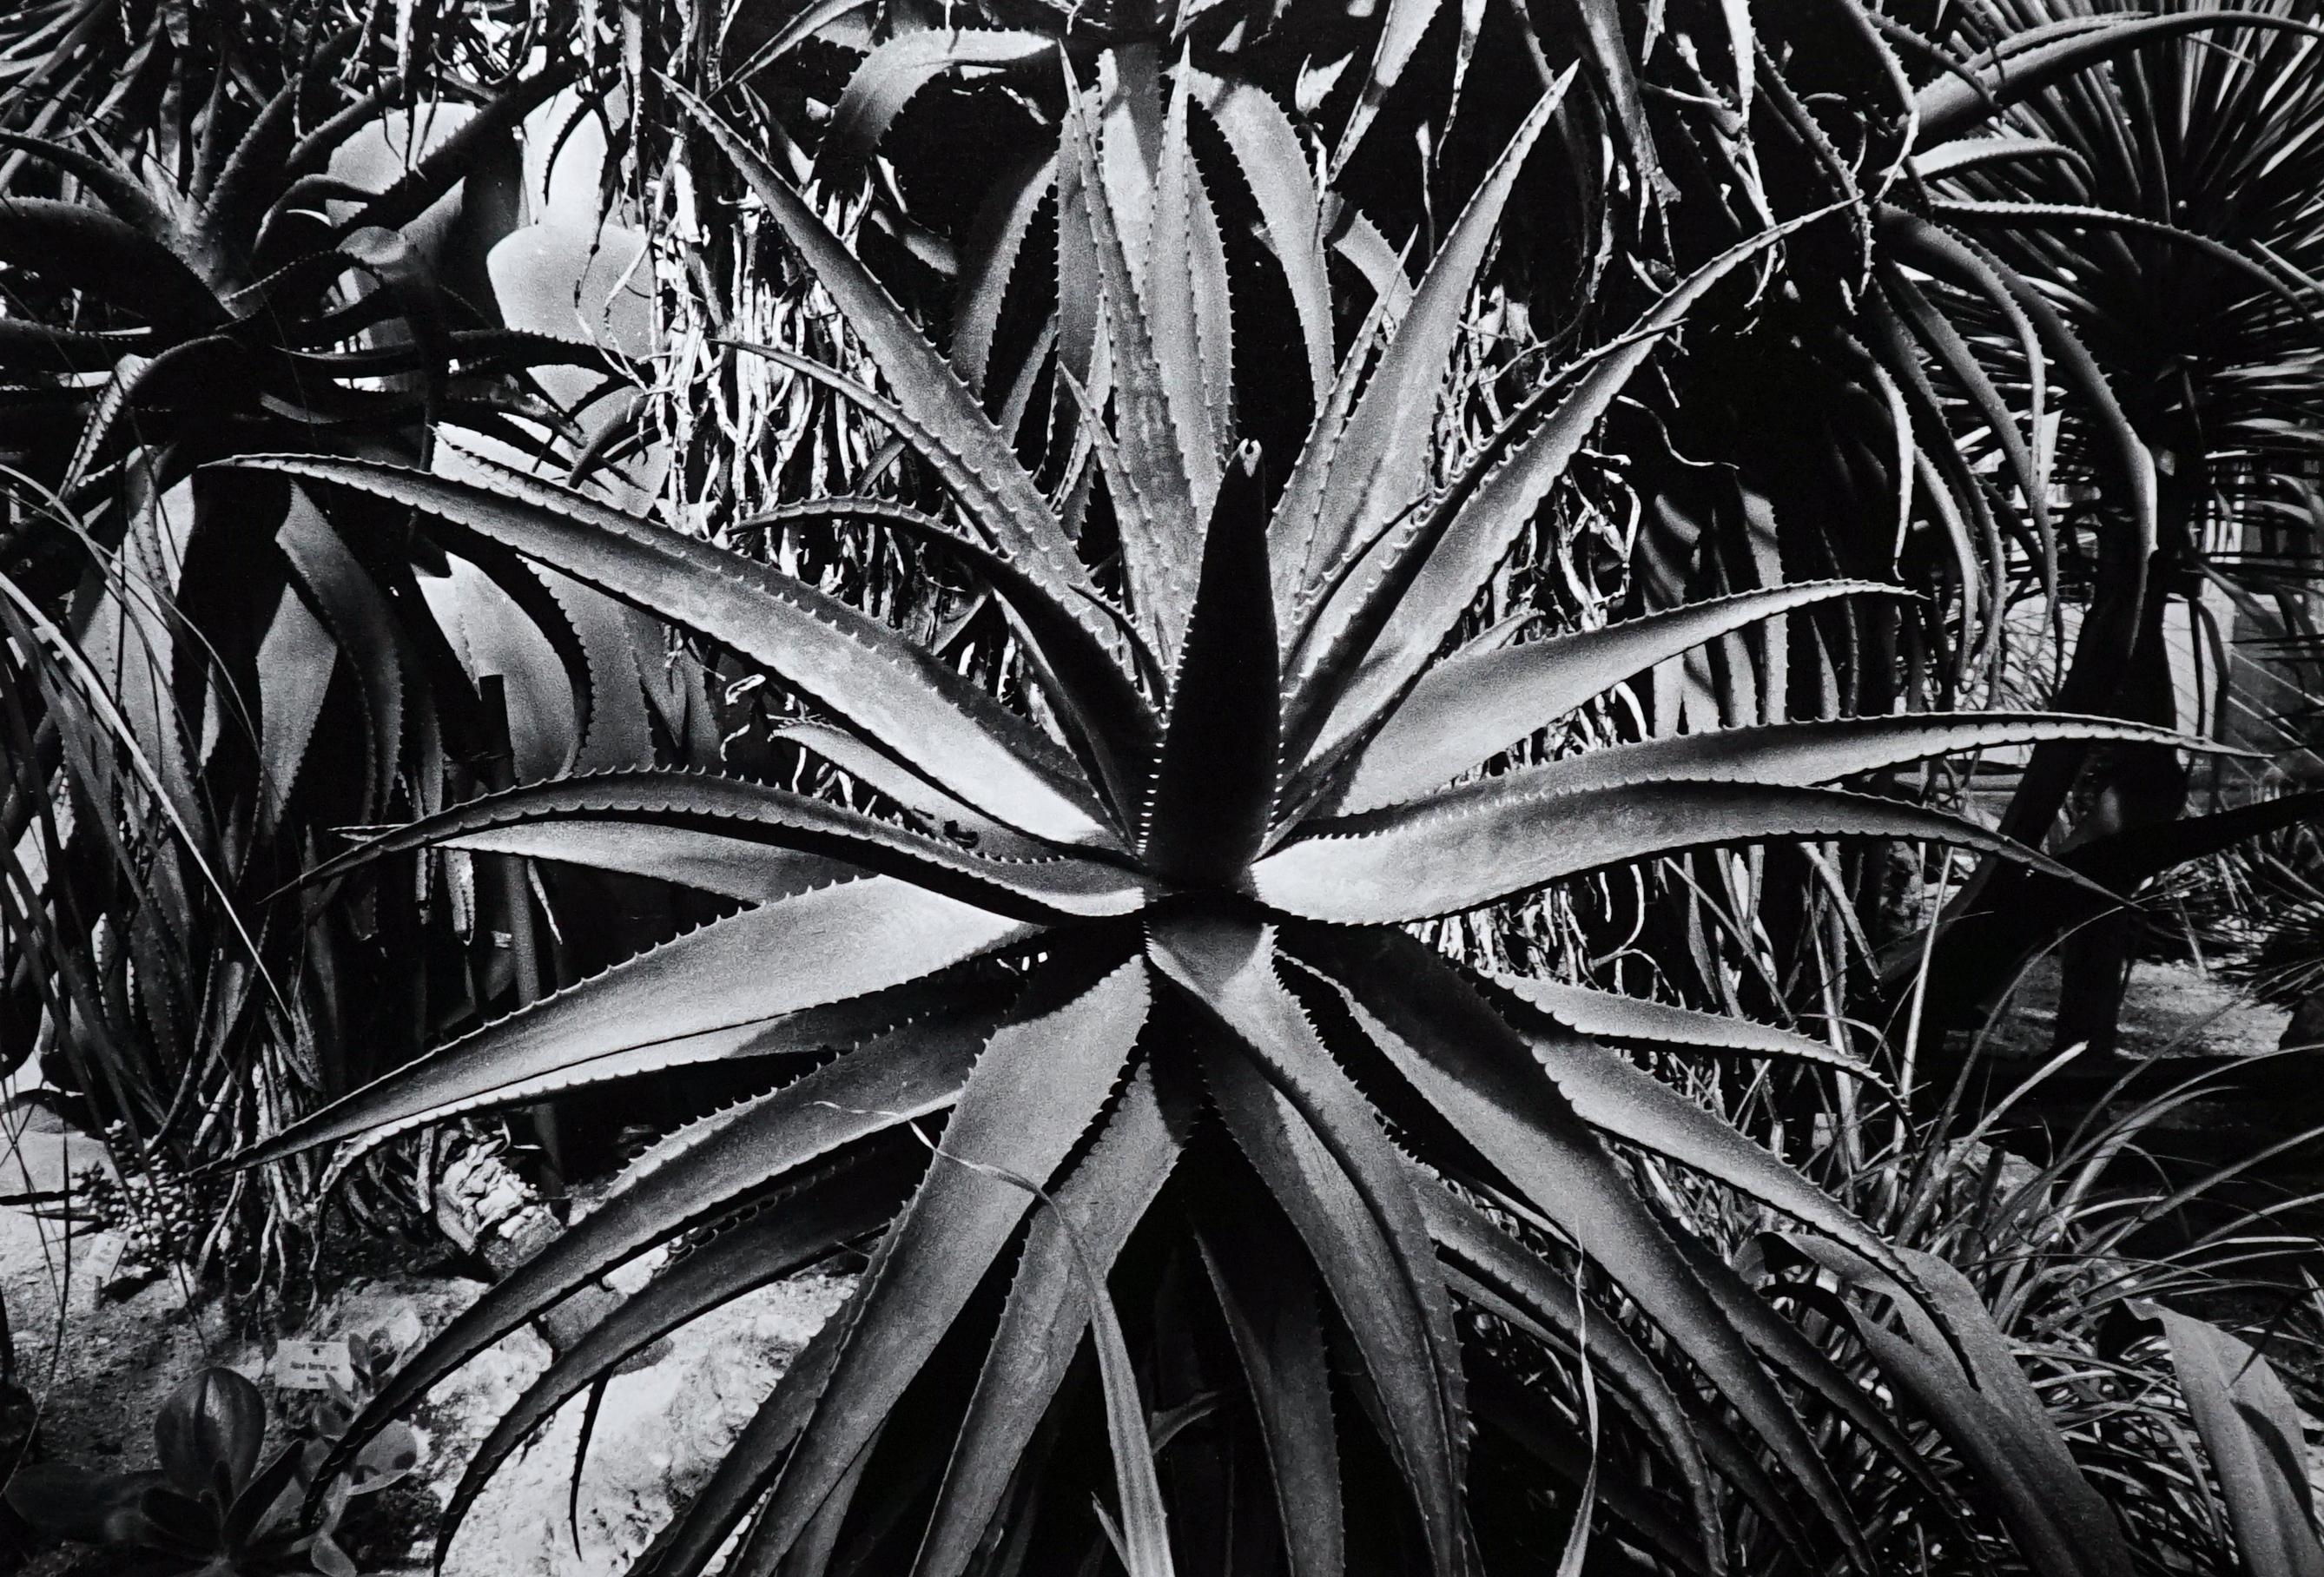 Jörg Krichbaum Abstract Photograph - Garden - Off-Print # 2 - Roma 1980 - Minimalist Black & White Photography